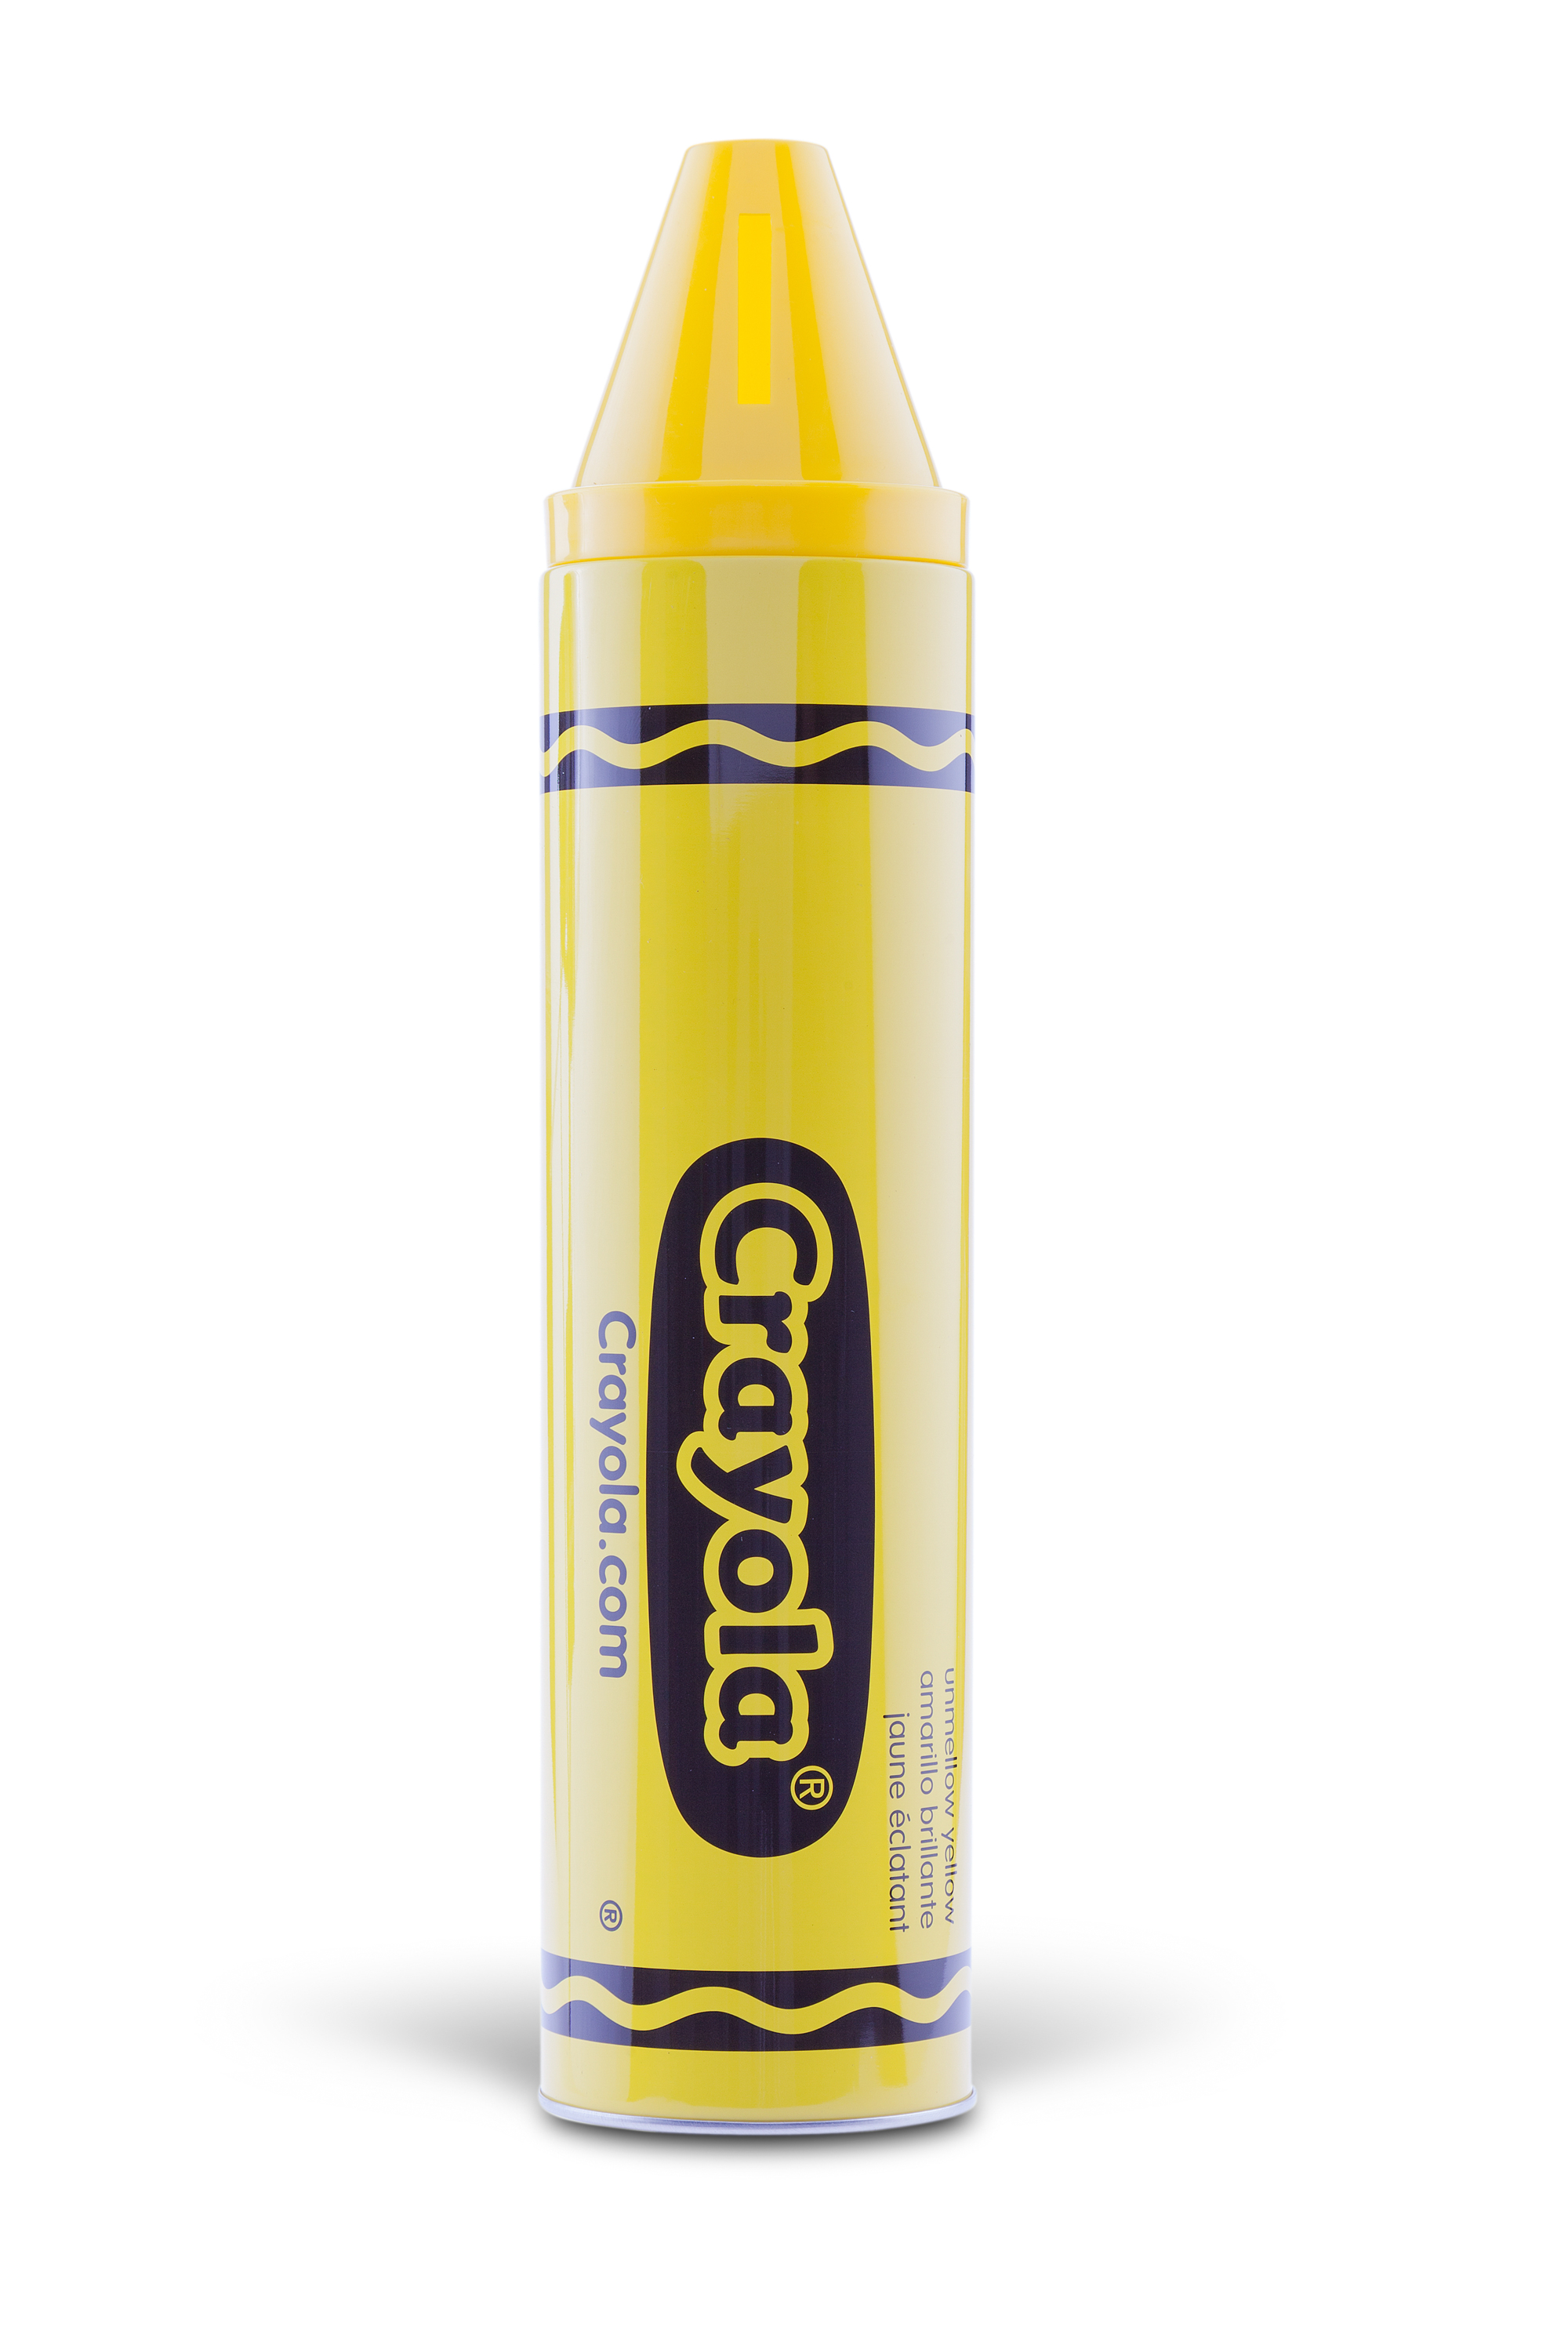 Crayon Bank 15" Tall - Unmellow Yellow | Crayola